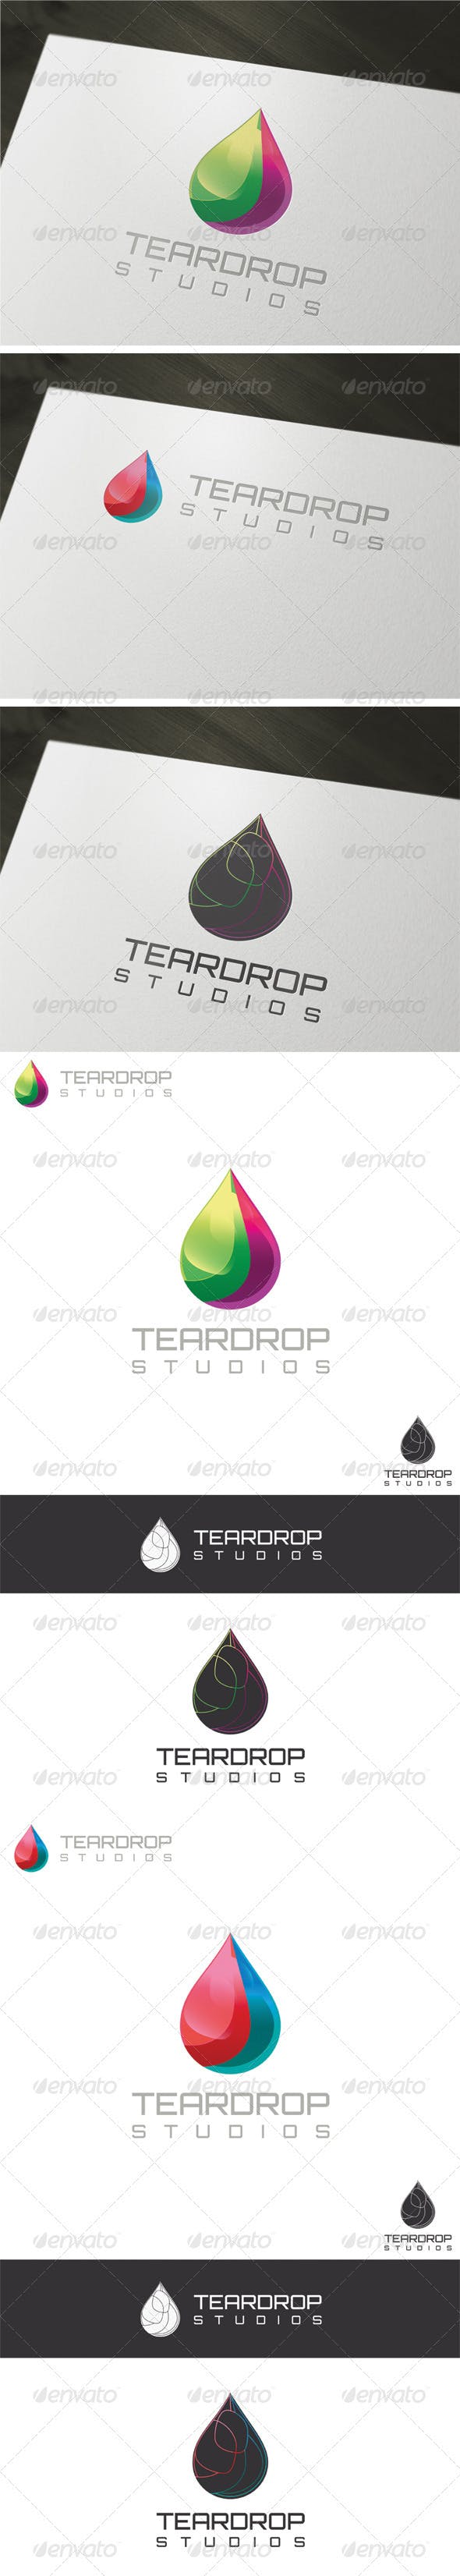 Teardrop Logo - 3D Teardrop Logo Template by EladChai | GraphicRiver